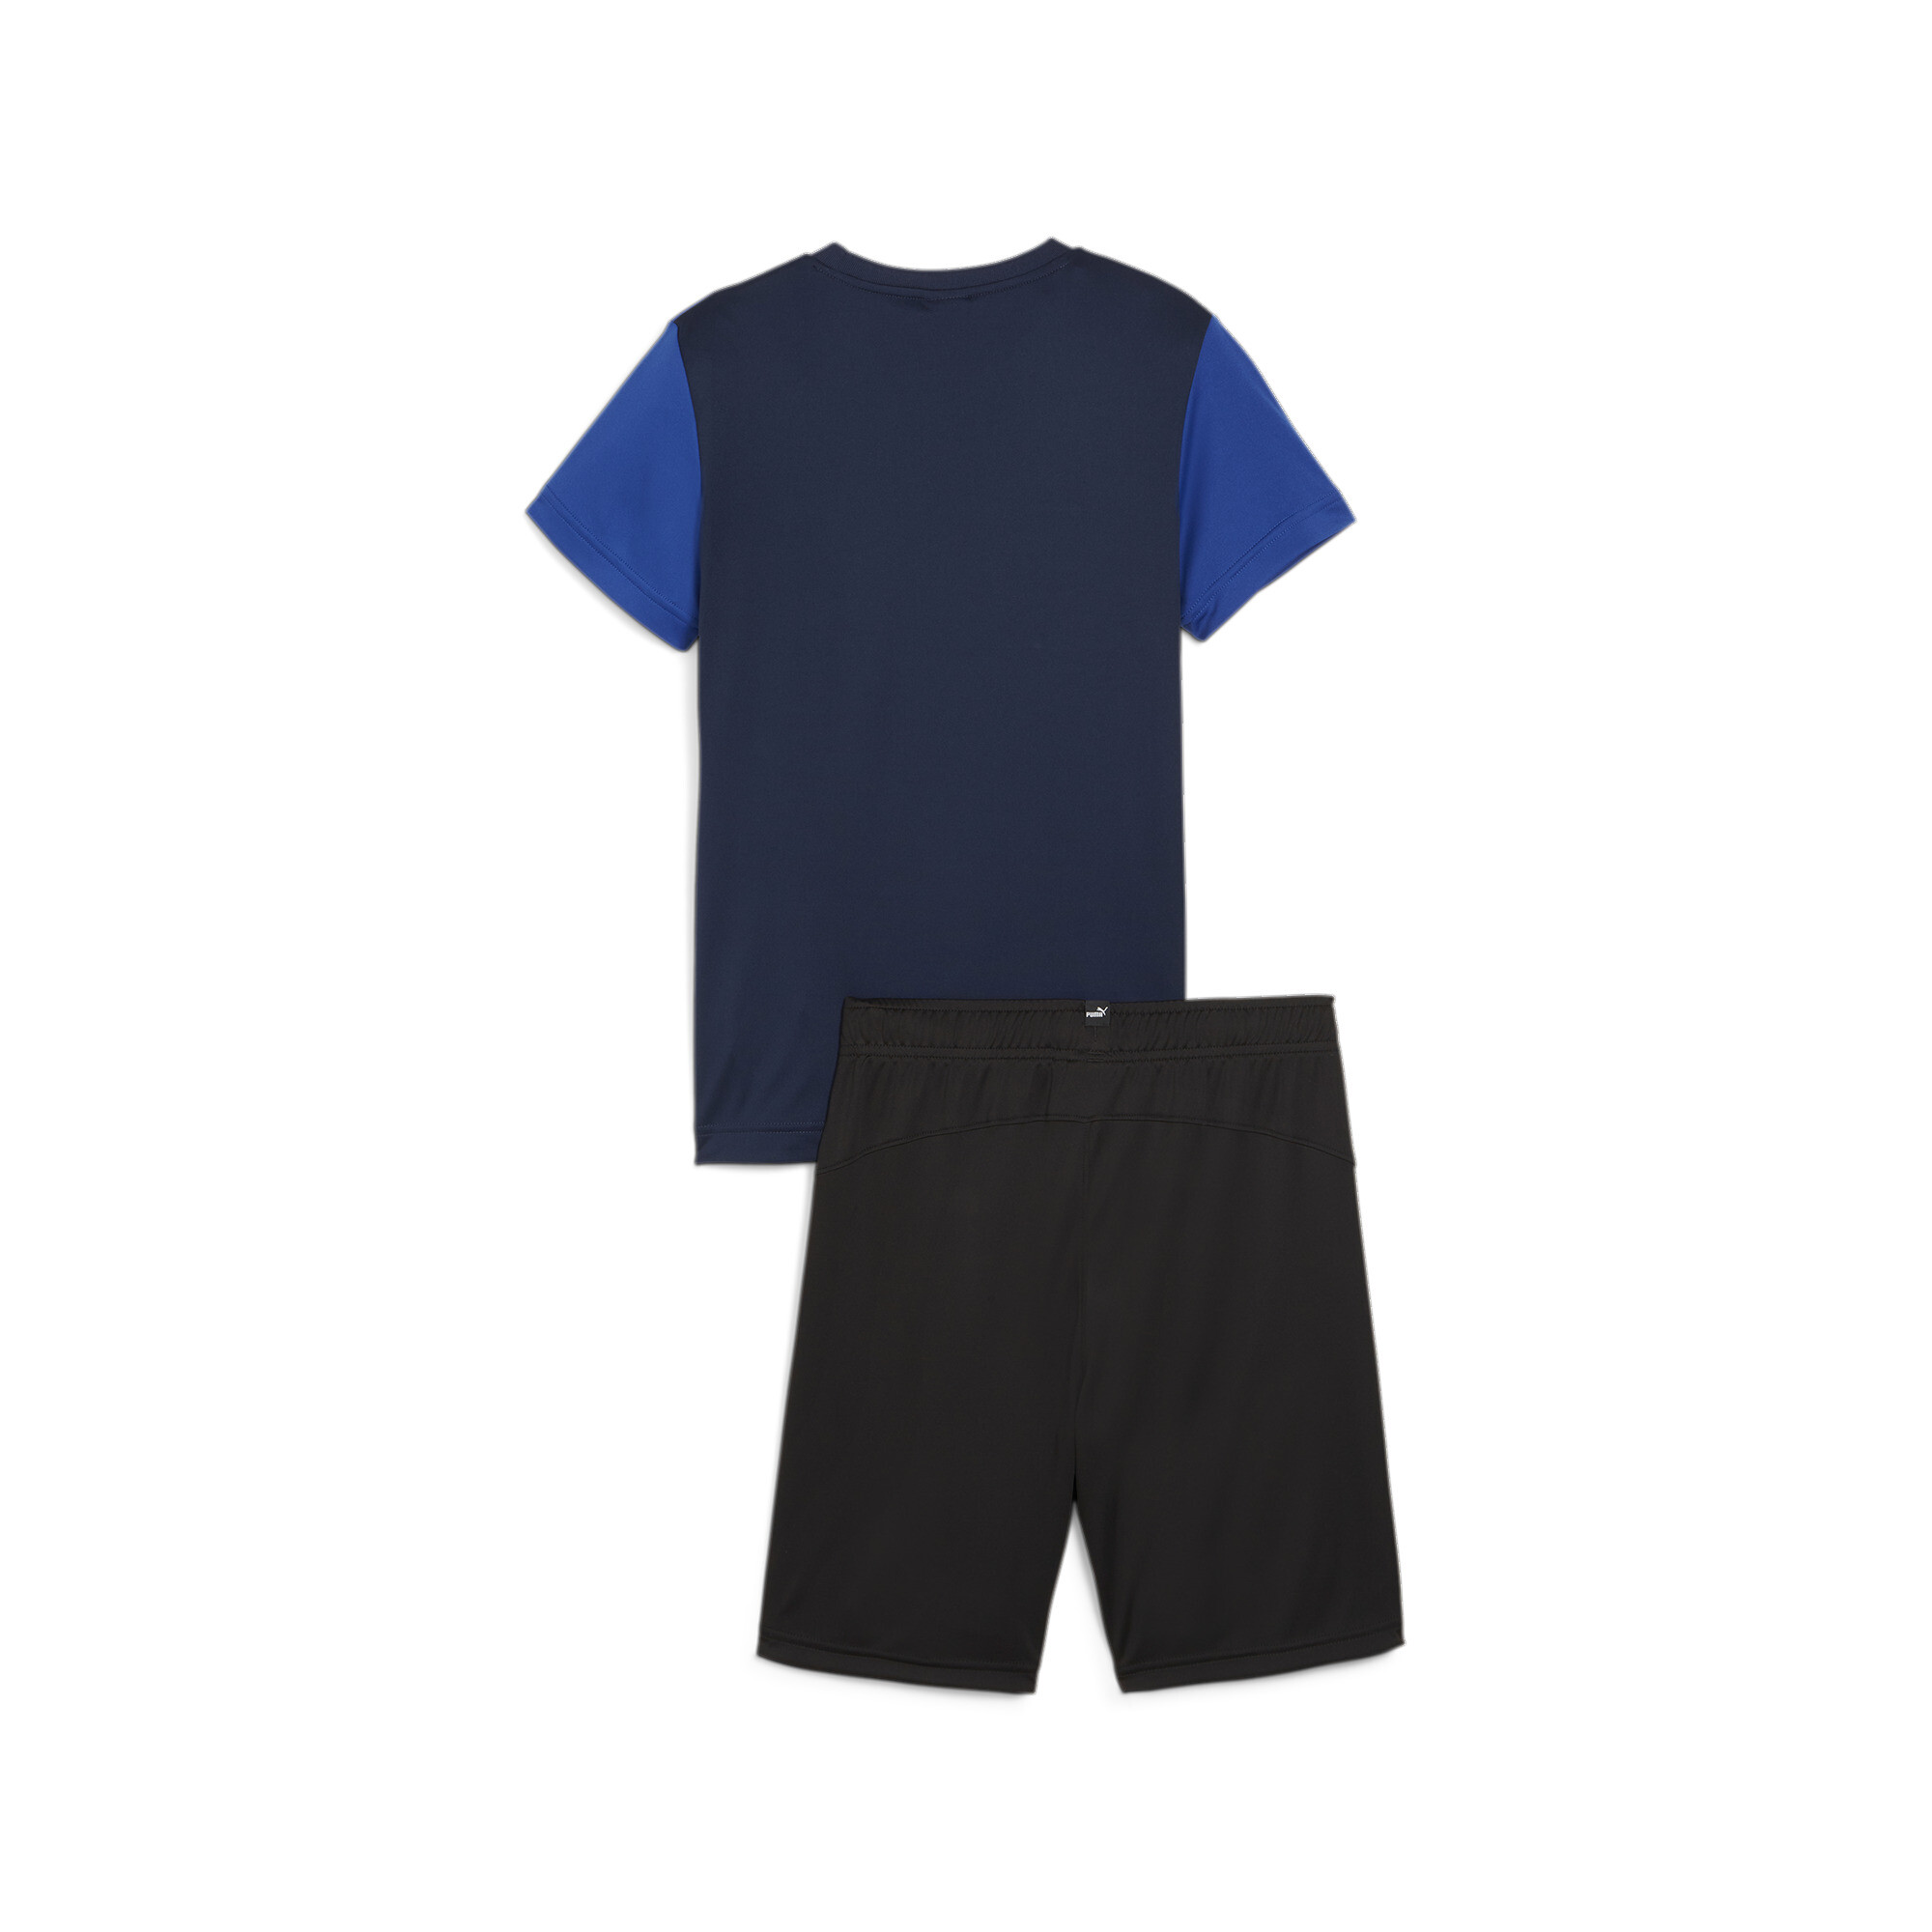 Men's Puma Polyester Youth Shorts Set, Blue, Size 15-16Y, Clothing